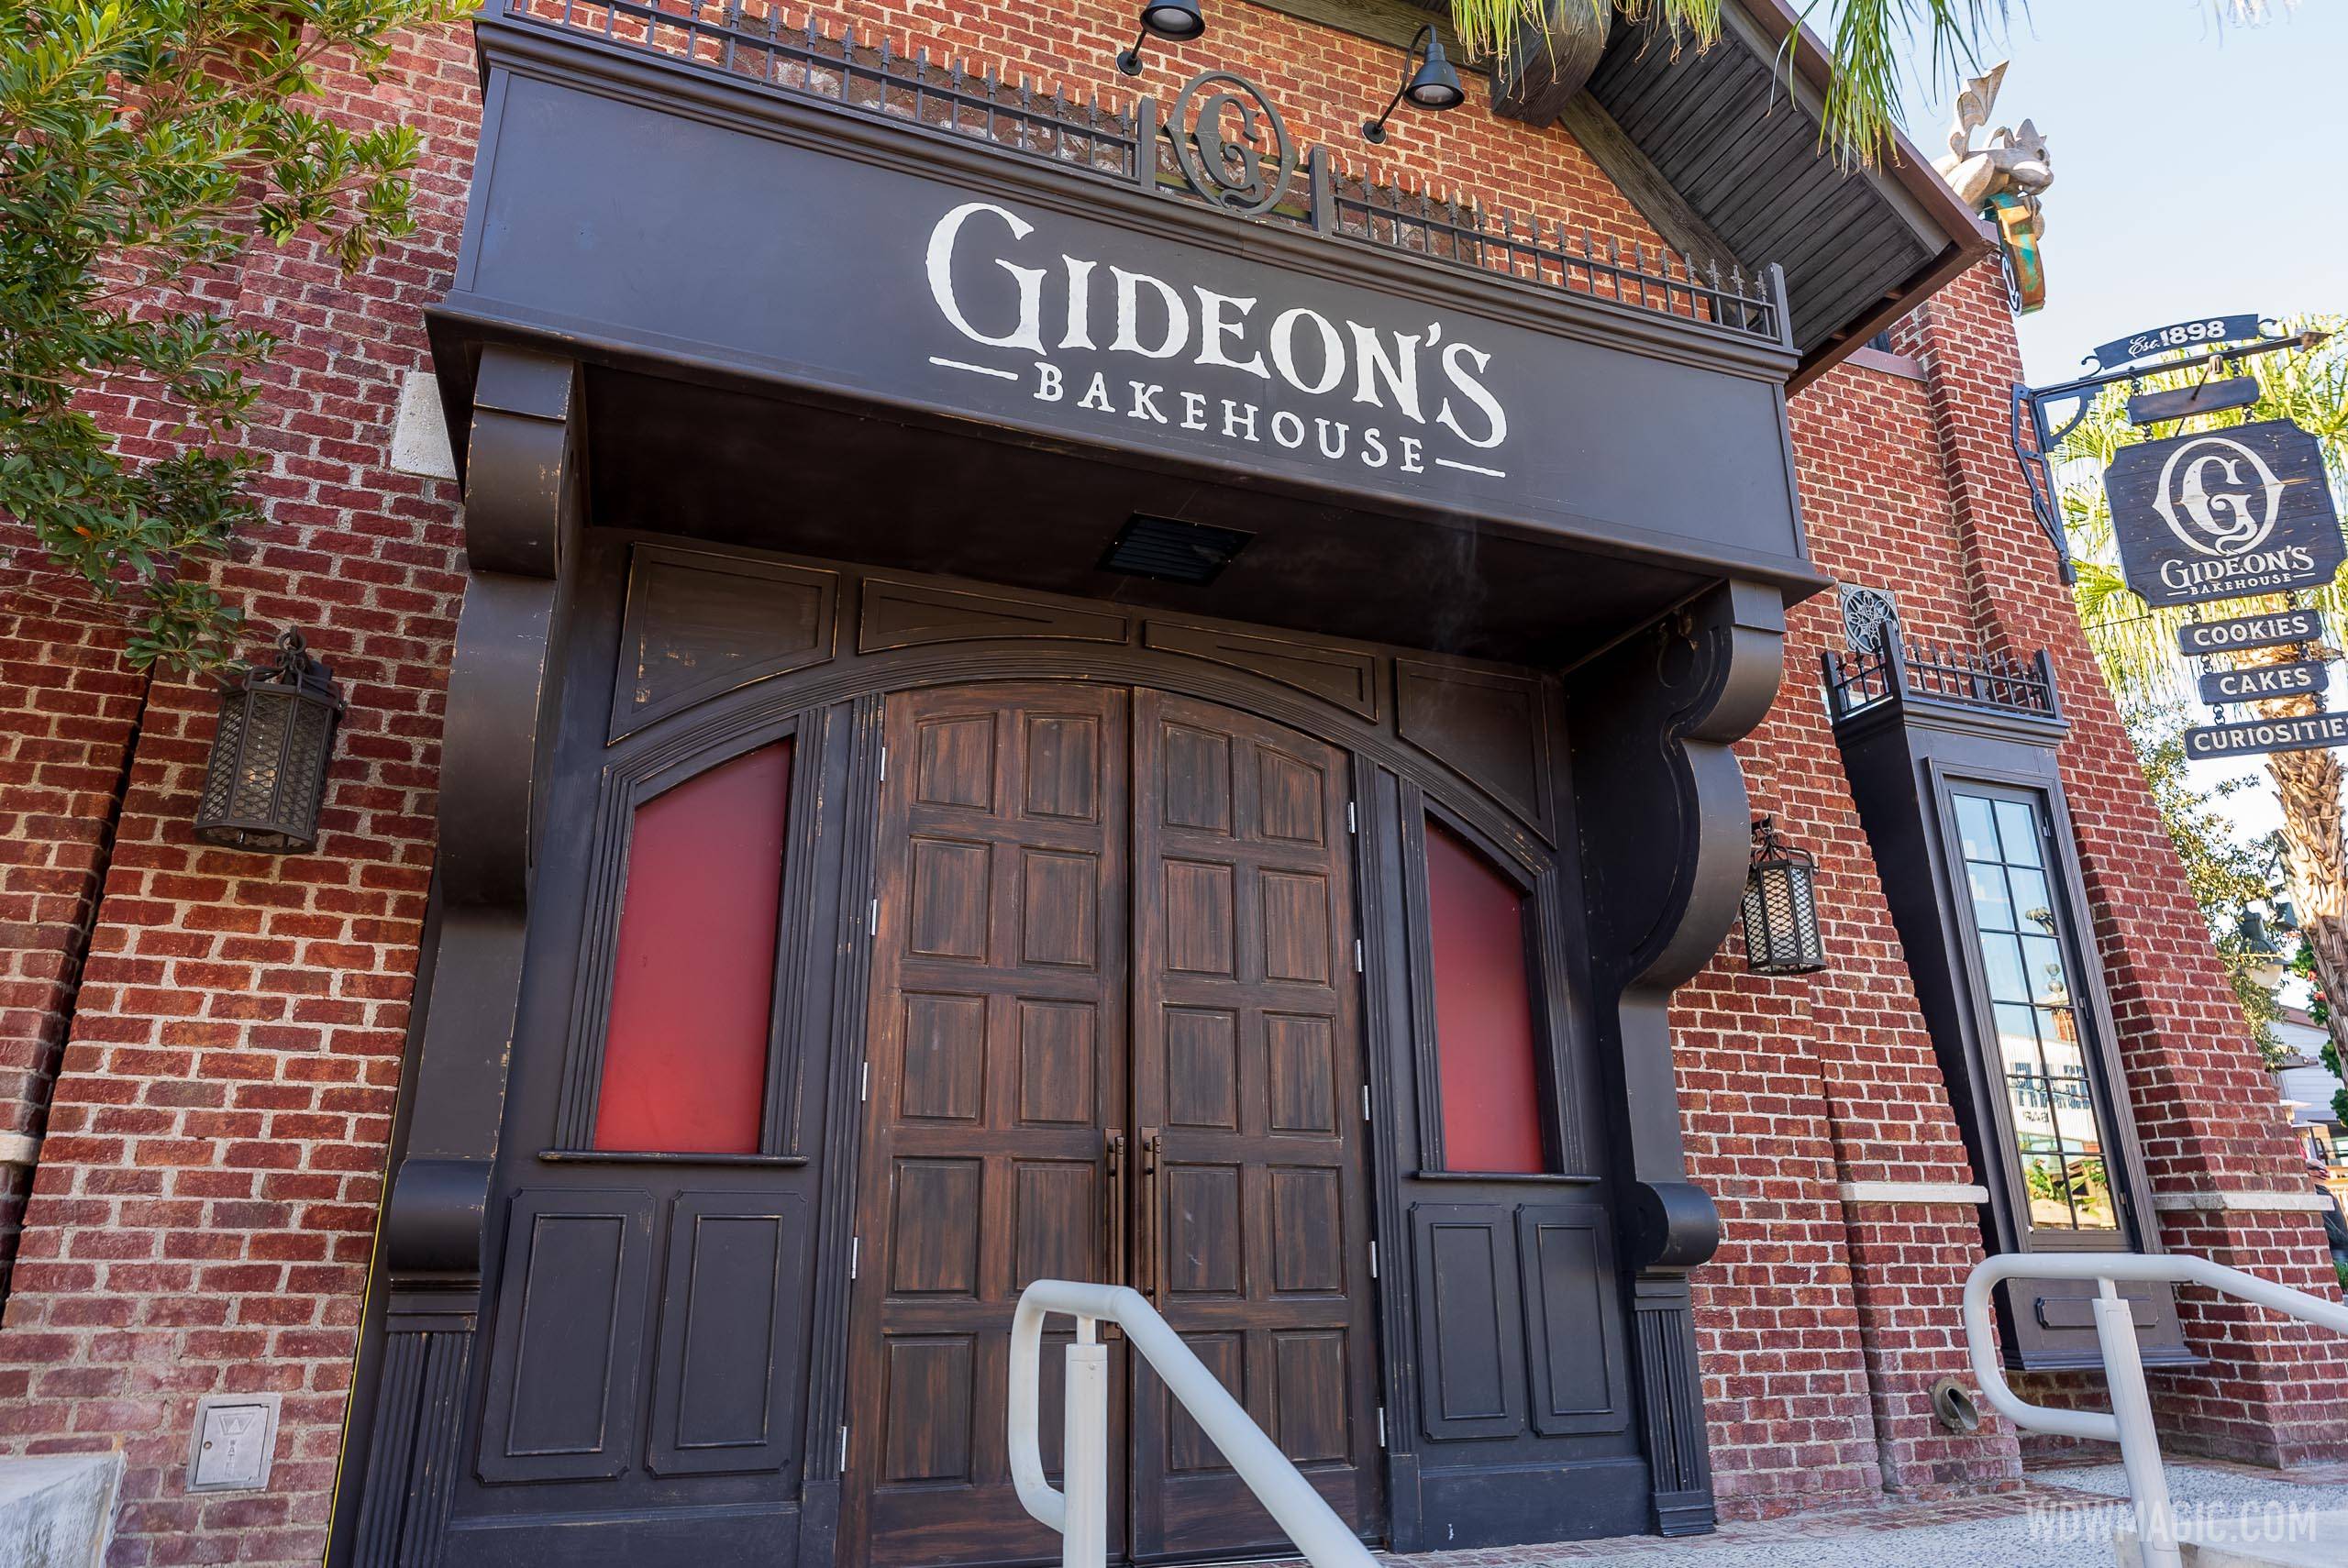 Gideon's opened on December 23 2020